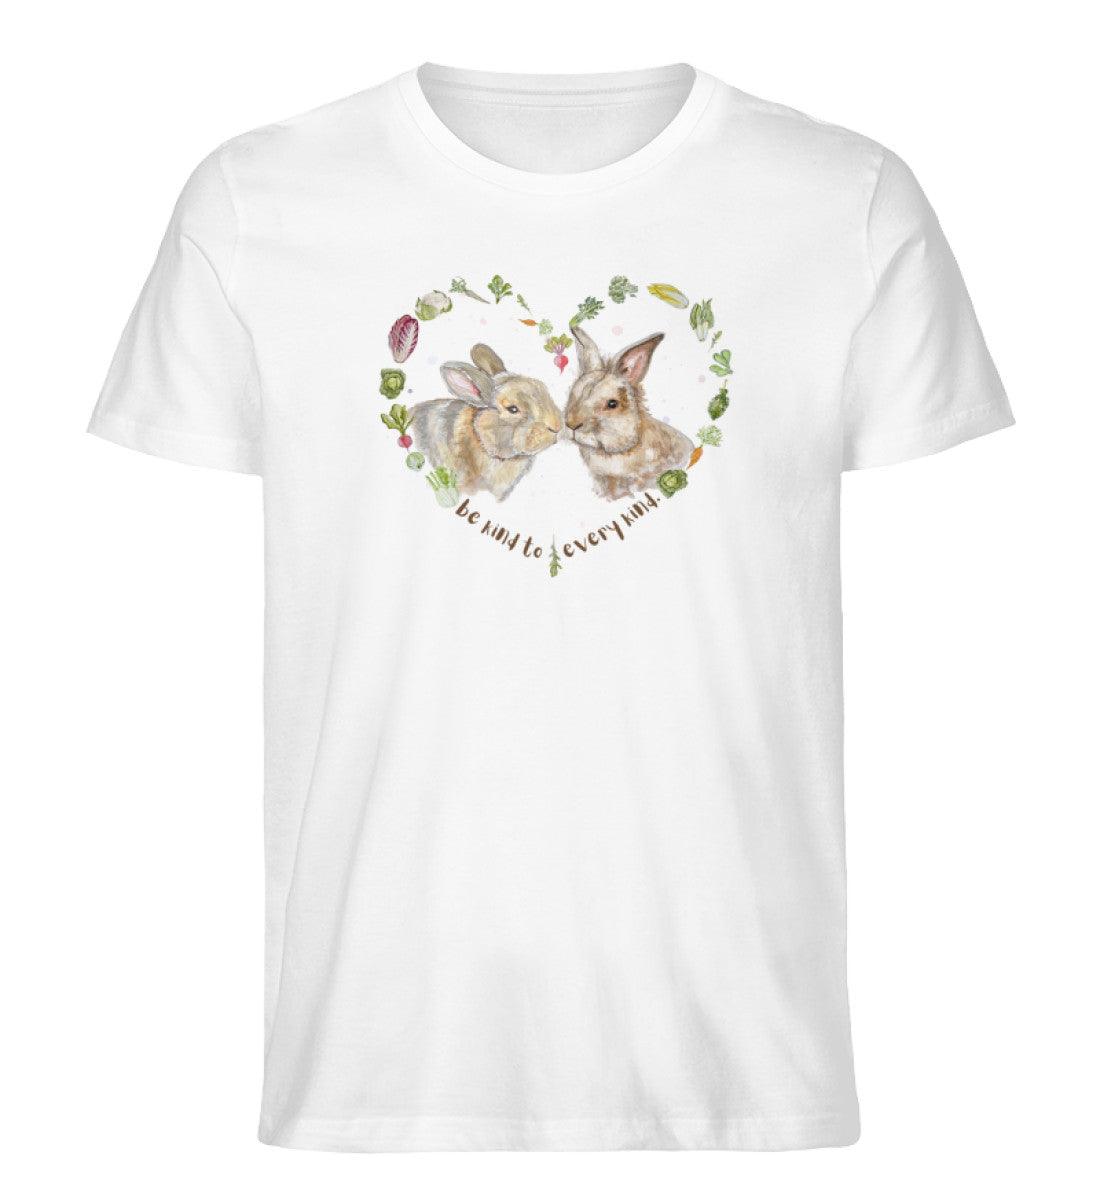 Be kind to every kind Rabbits [Svenja Rakel] - Unisex Organic Shirt - Team Vegan © vegan t shirt